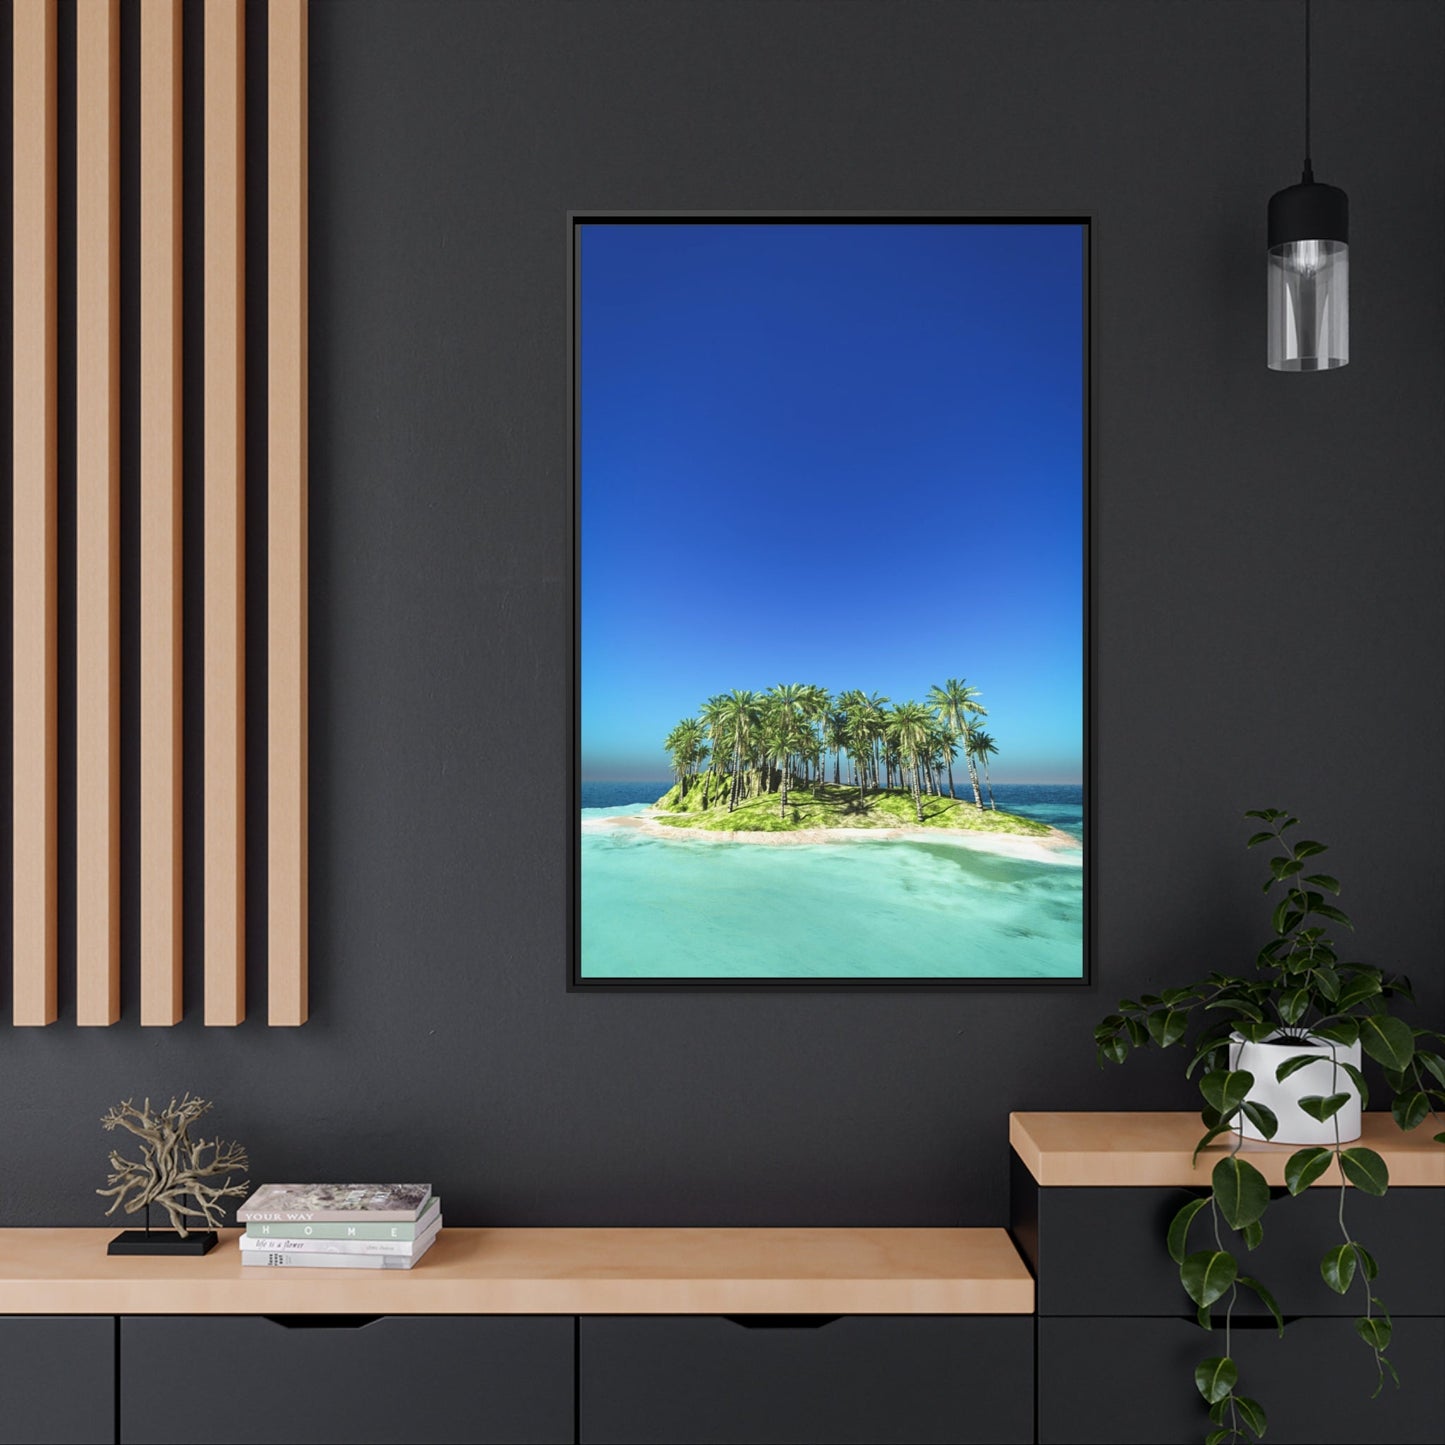 Coastal Charm: Print on Canvas of a Beautiful Beach on an Island